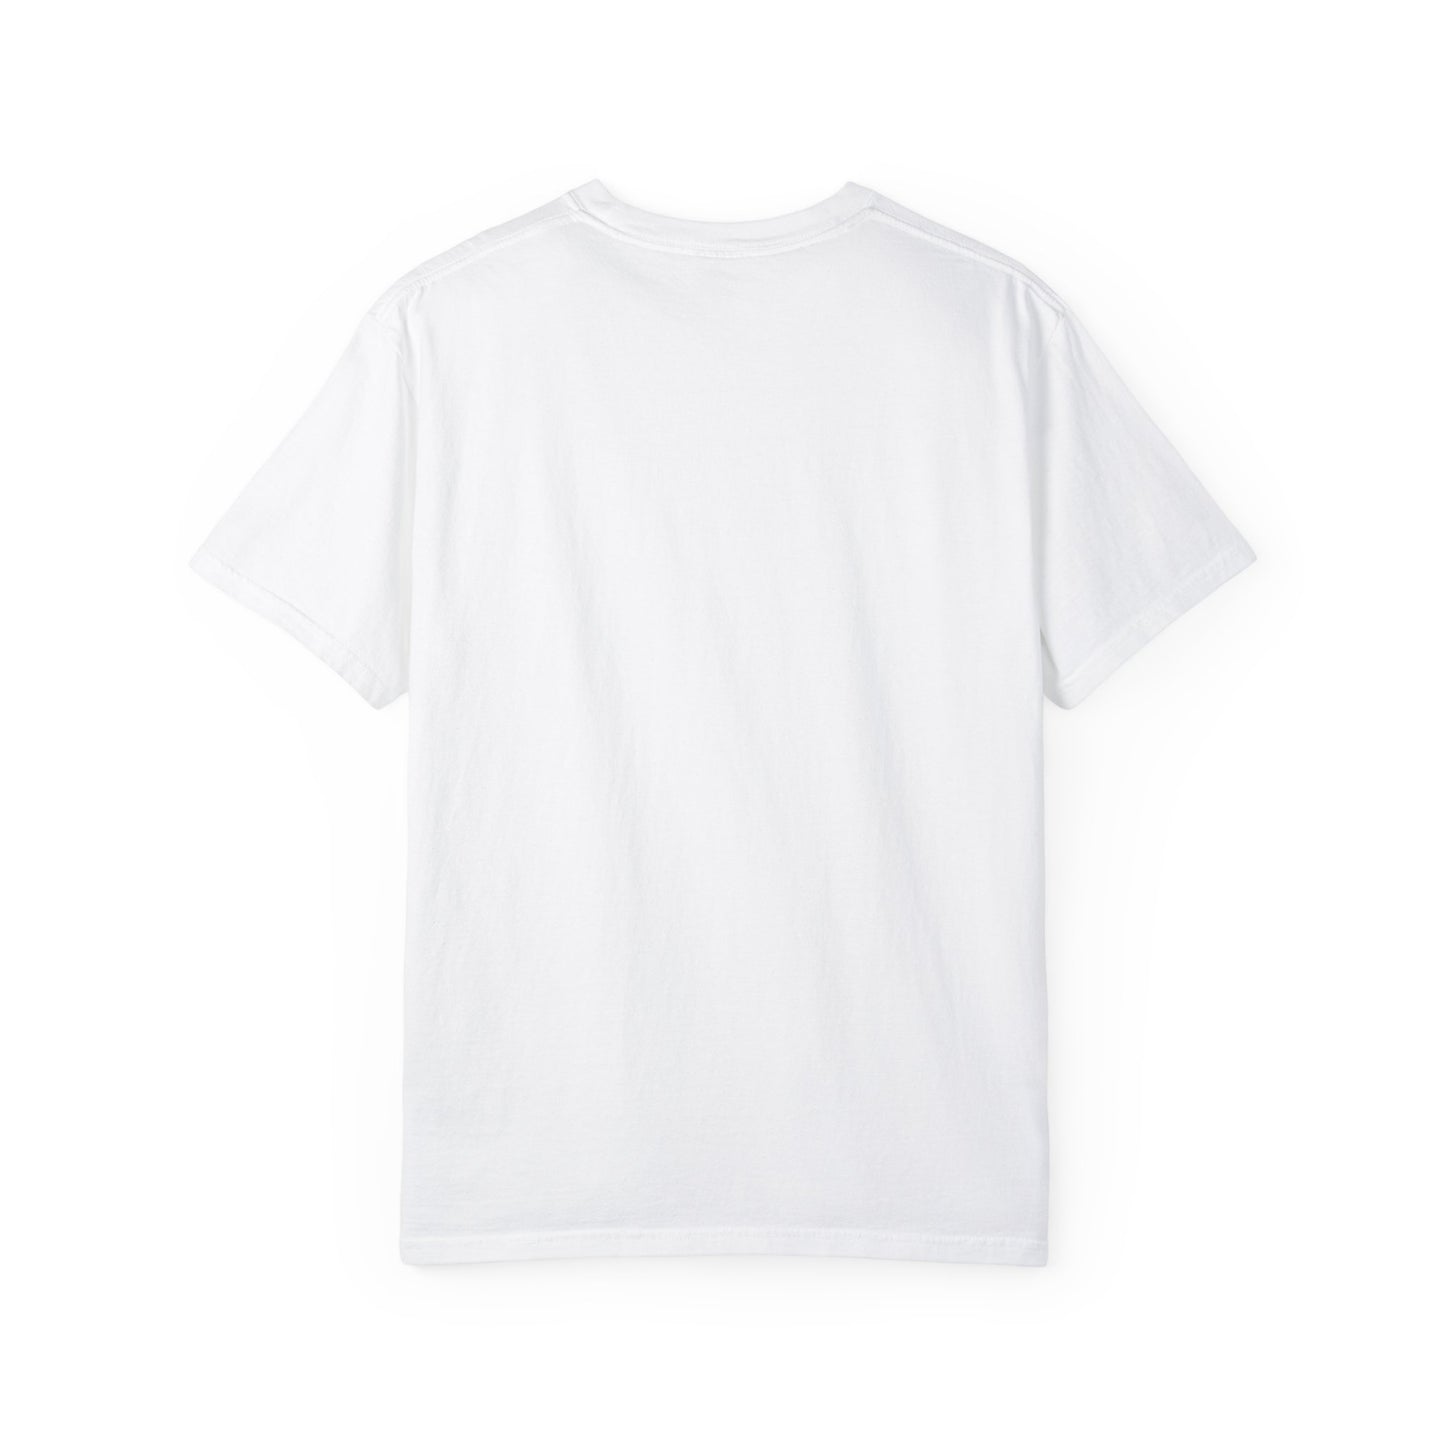 Lima, Ohio White T-shirt